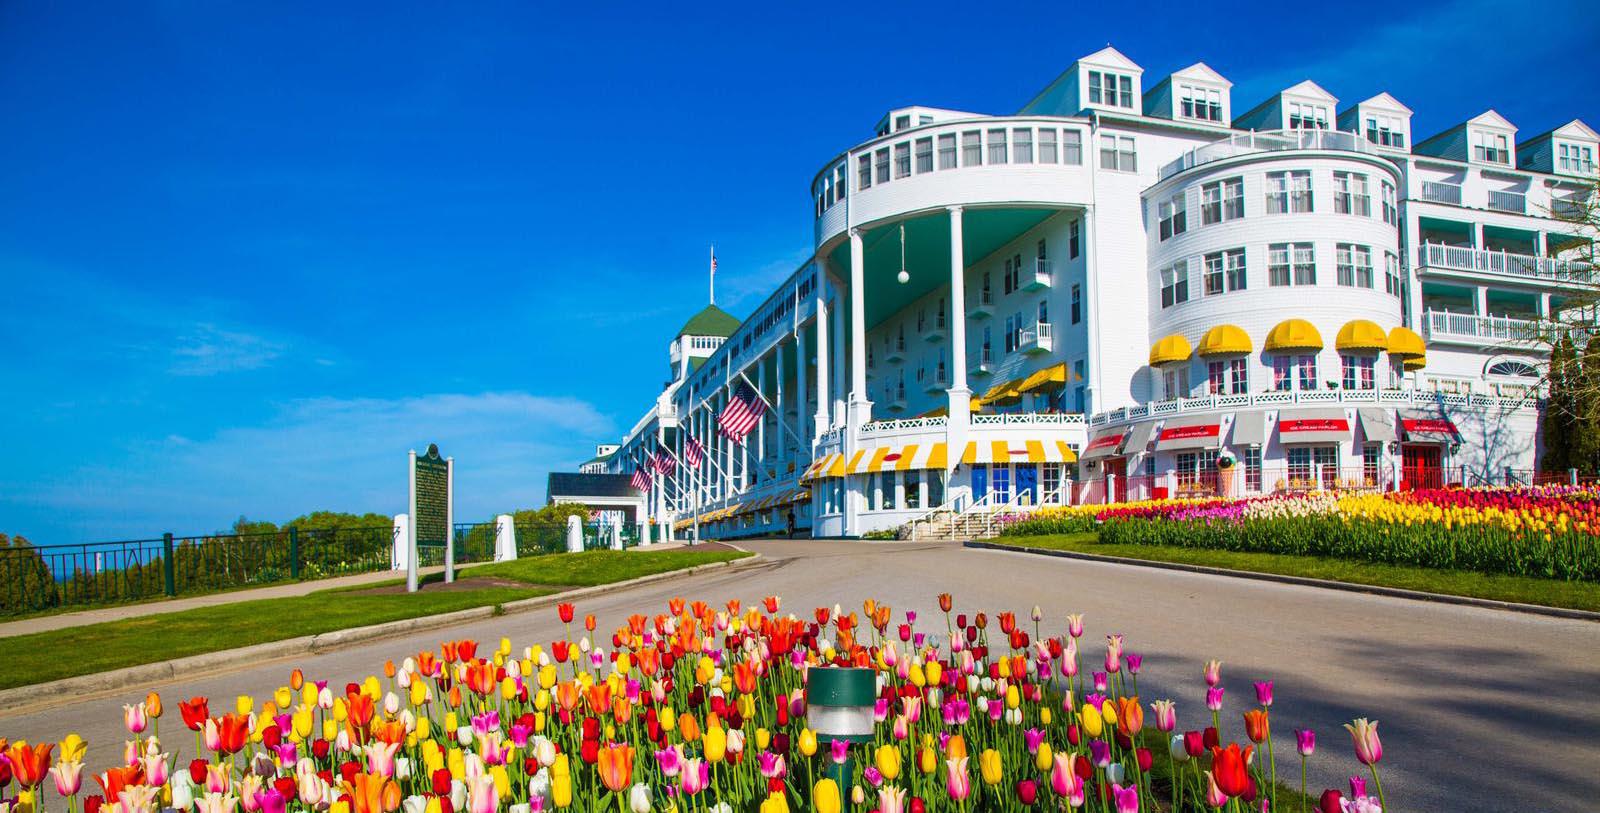 The Grand Hotel on Mackinac Island Michigan - Pustly.Com